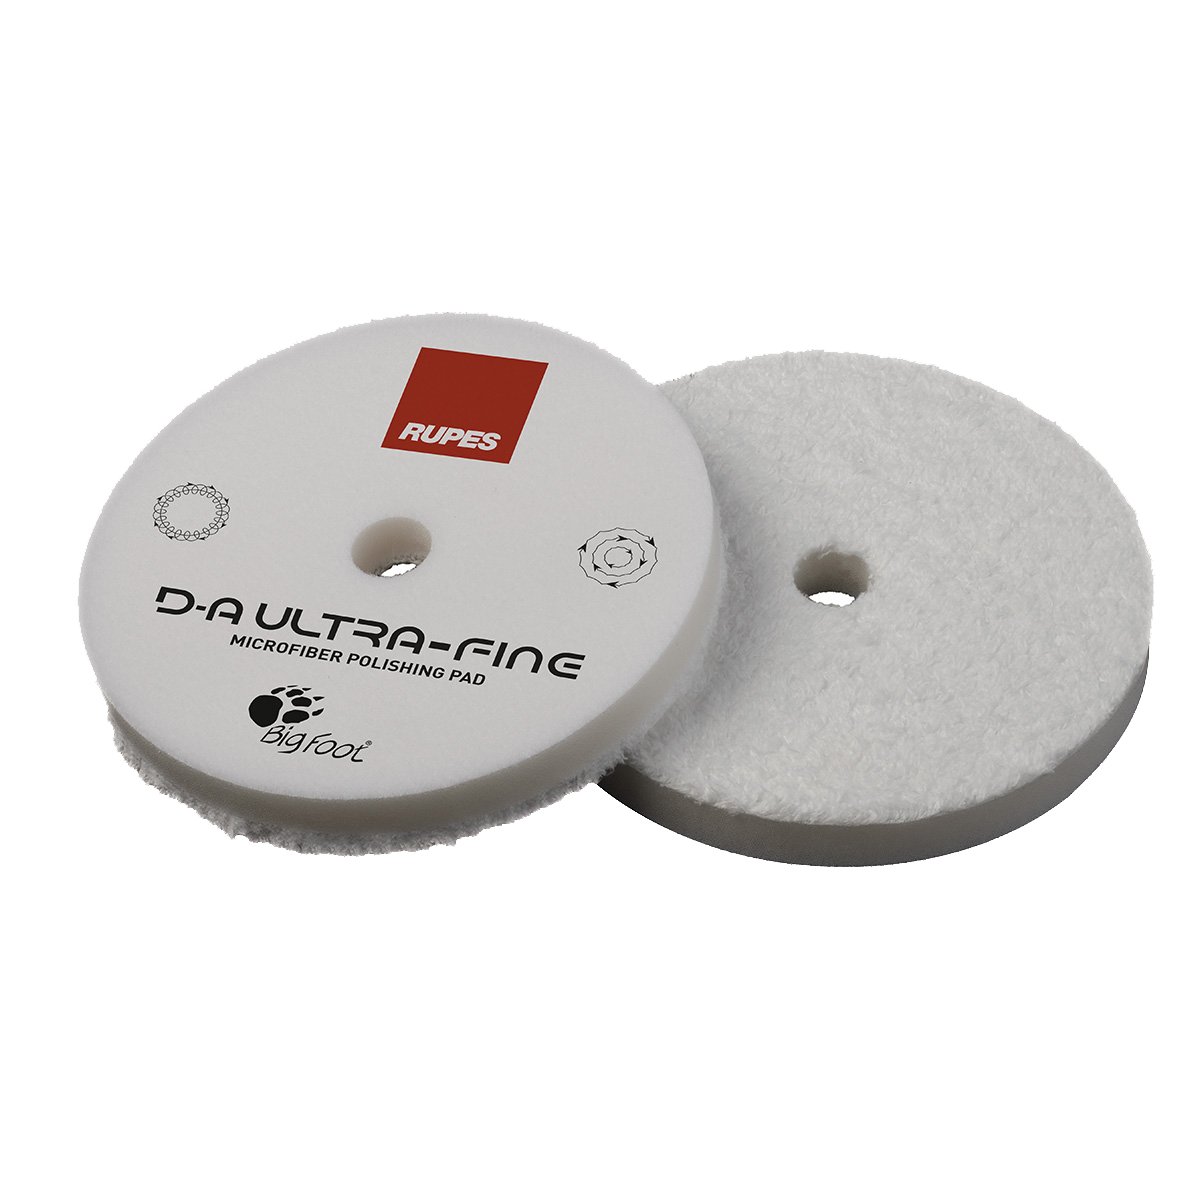 D-A Ultra Fine Microfiber Polishing Pad - 125mm